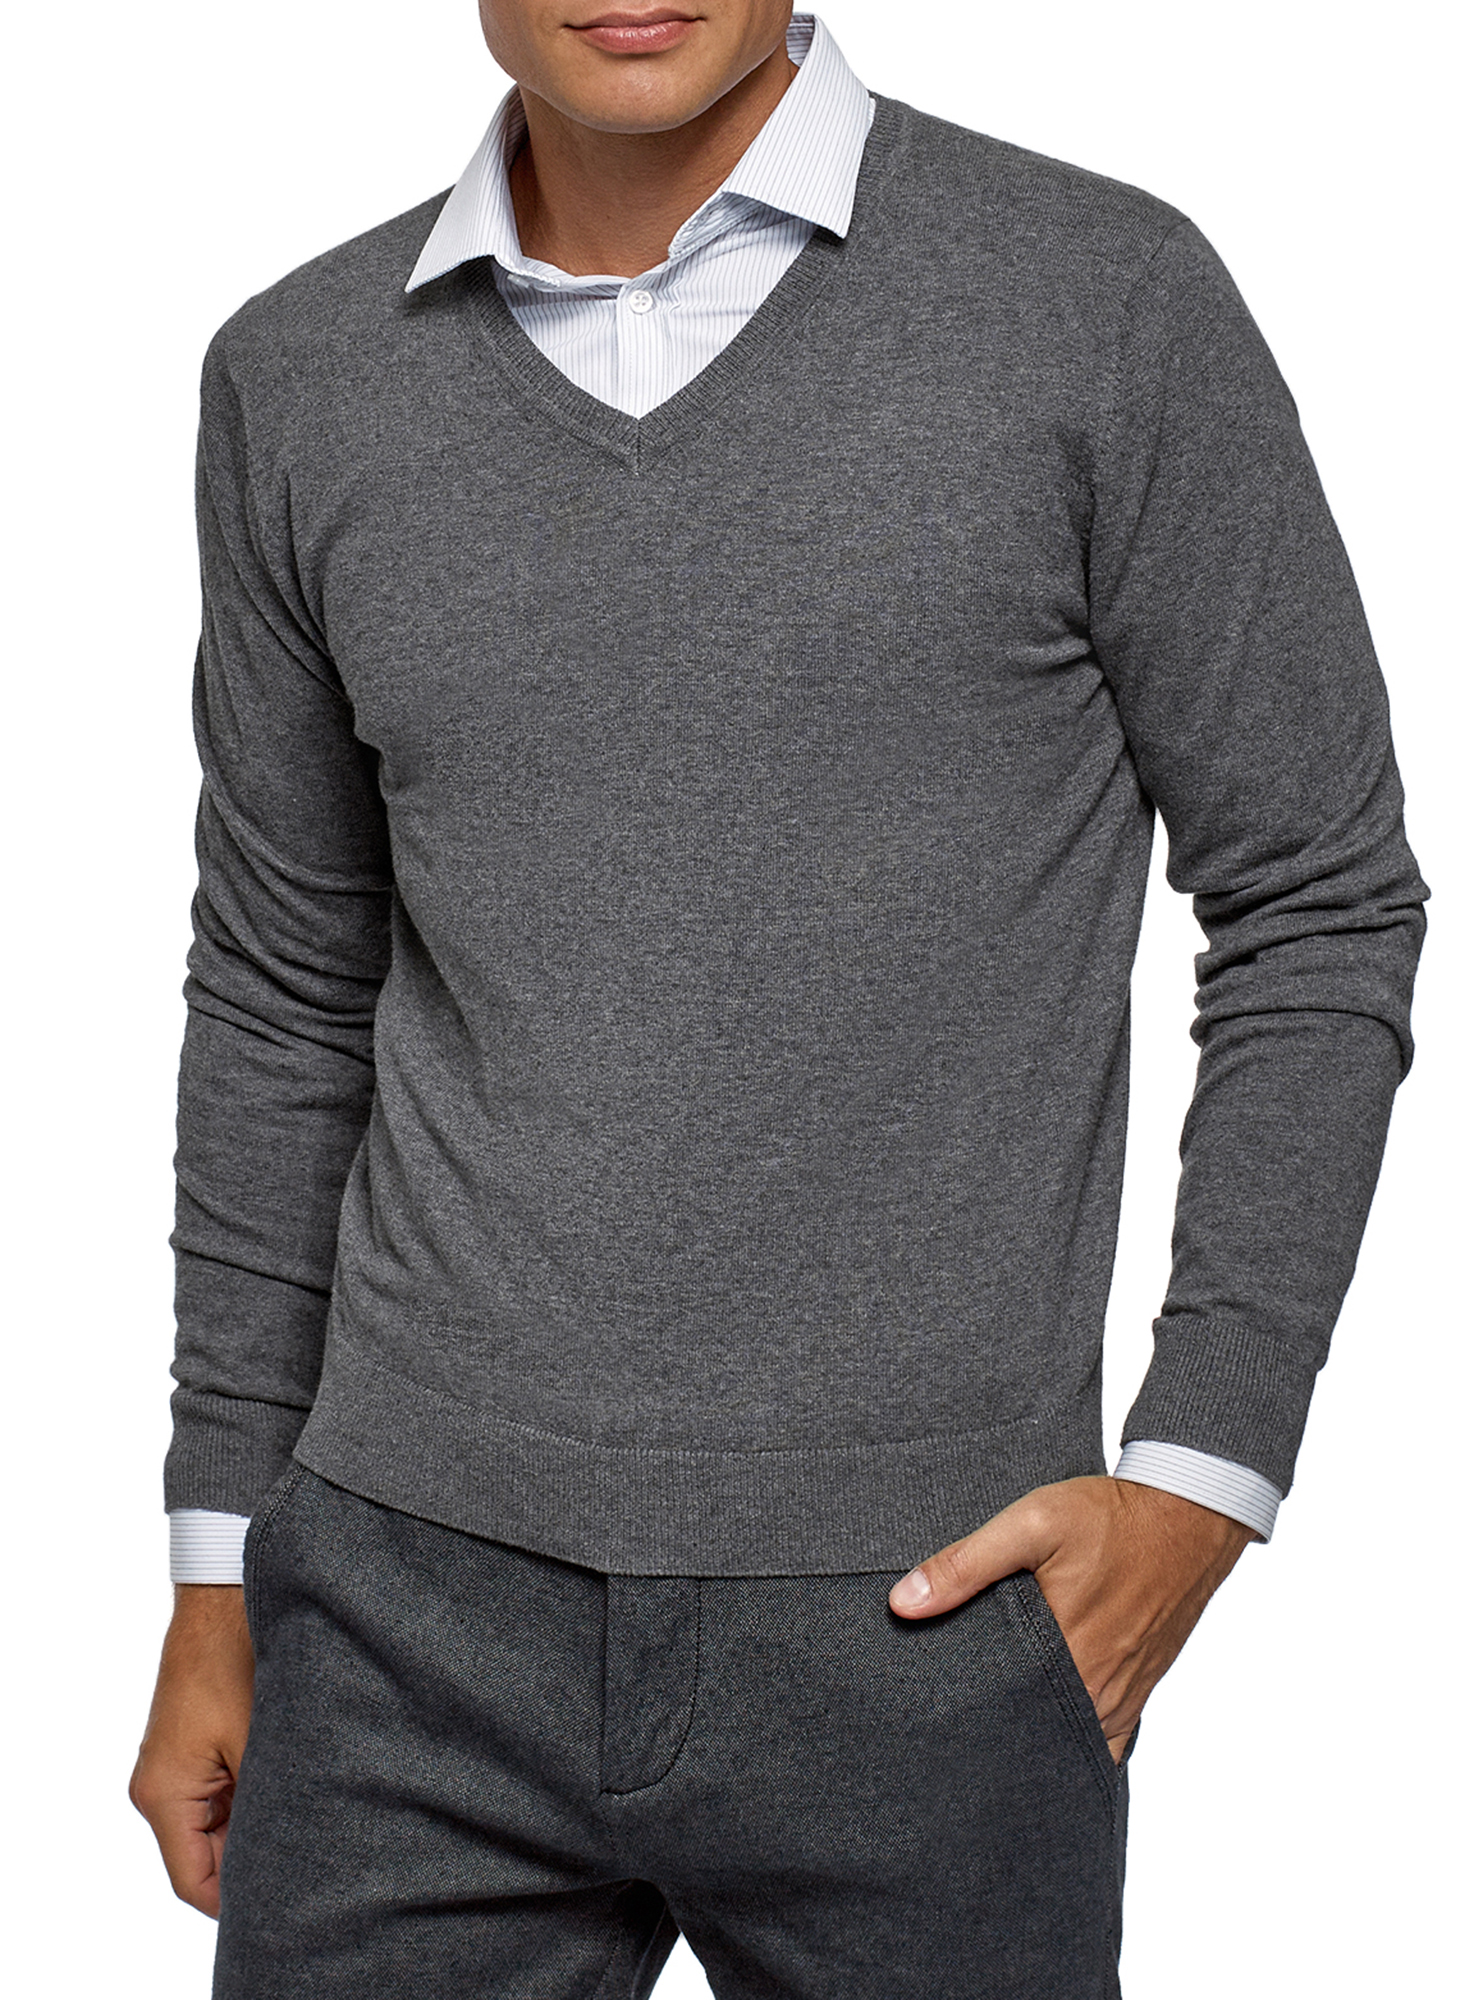 Пуловер мужской oodji 4B212007M-1 серый L